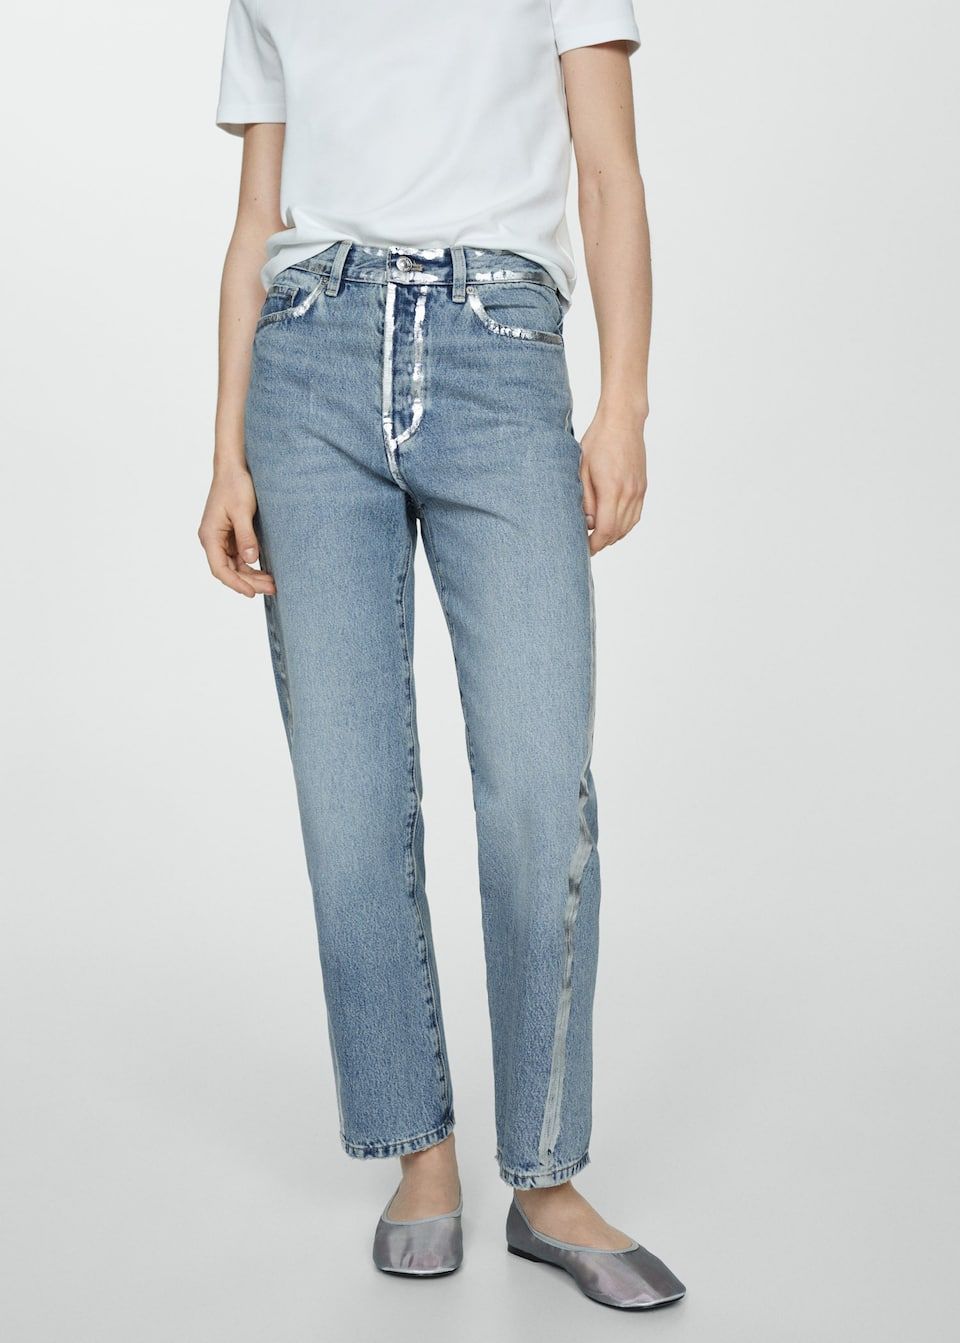 Mango - Quần jeans nữ Straight jeans with foil details